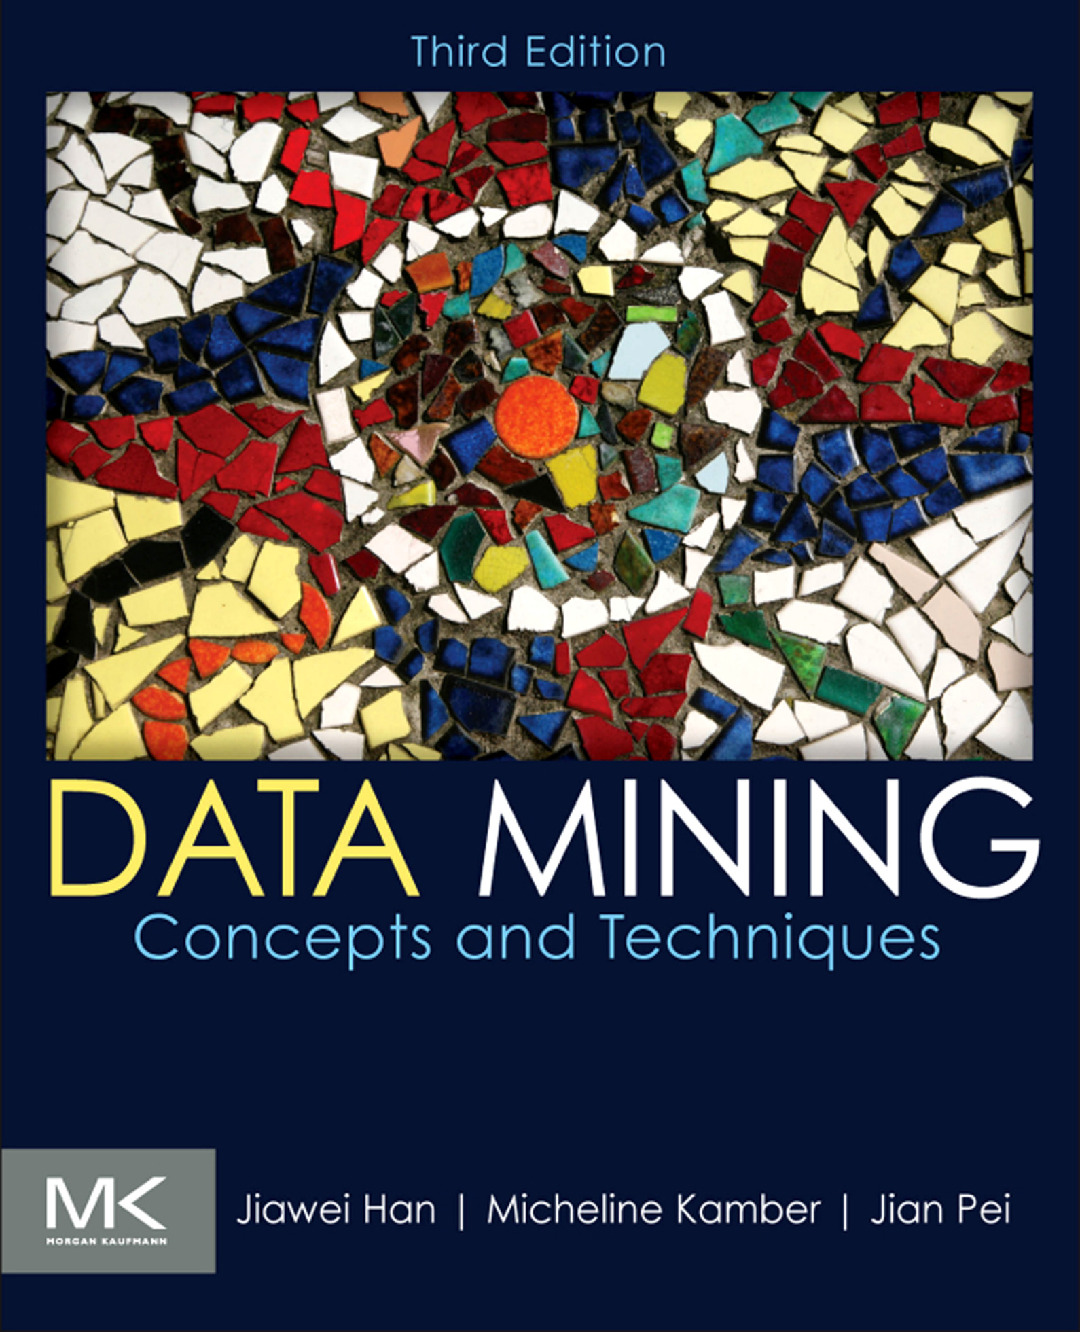 The-Morgan-Kaufmann-Series-in-Data-Management-Systems-Jiawei-Han-Micheline-Kamber-Jian-Pei-Data-Mining.-Concepts-and-Techniques-3rd-Edition-Morgan-Kaufmann-2011 (1)